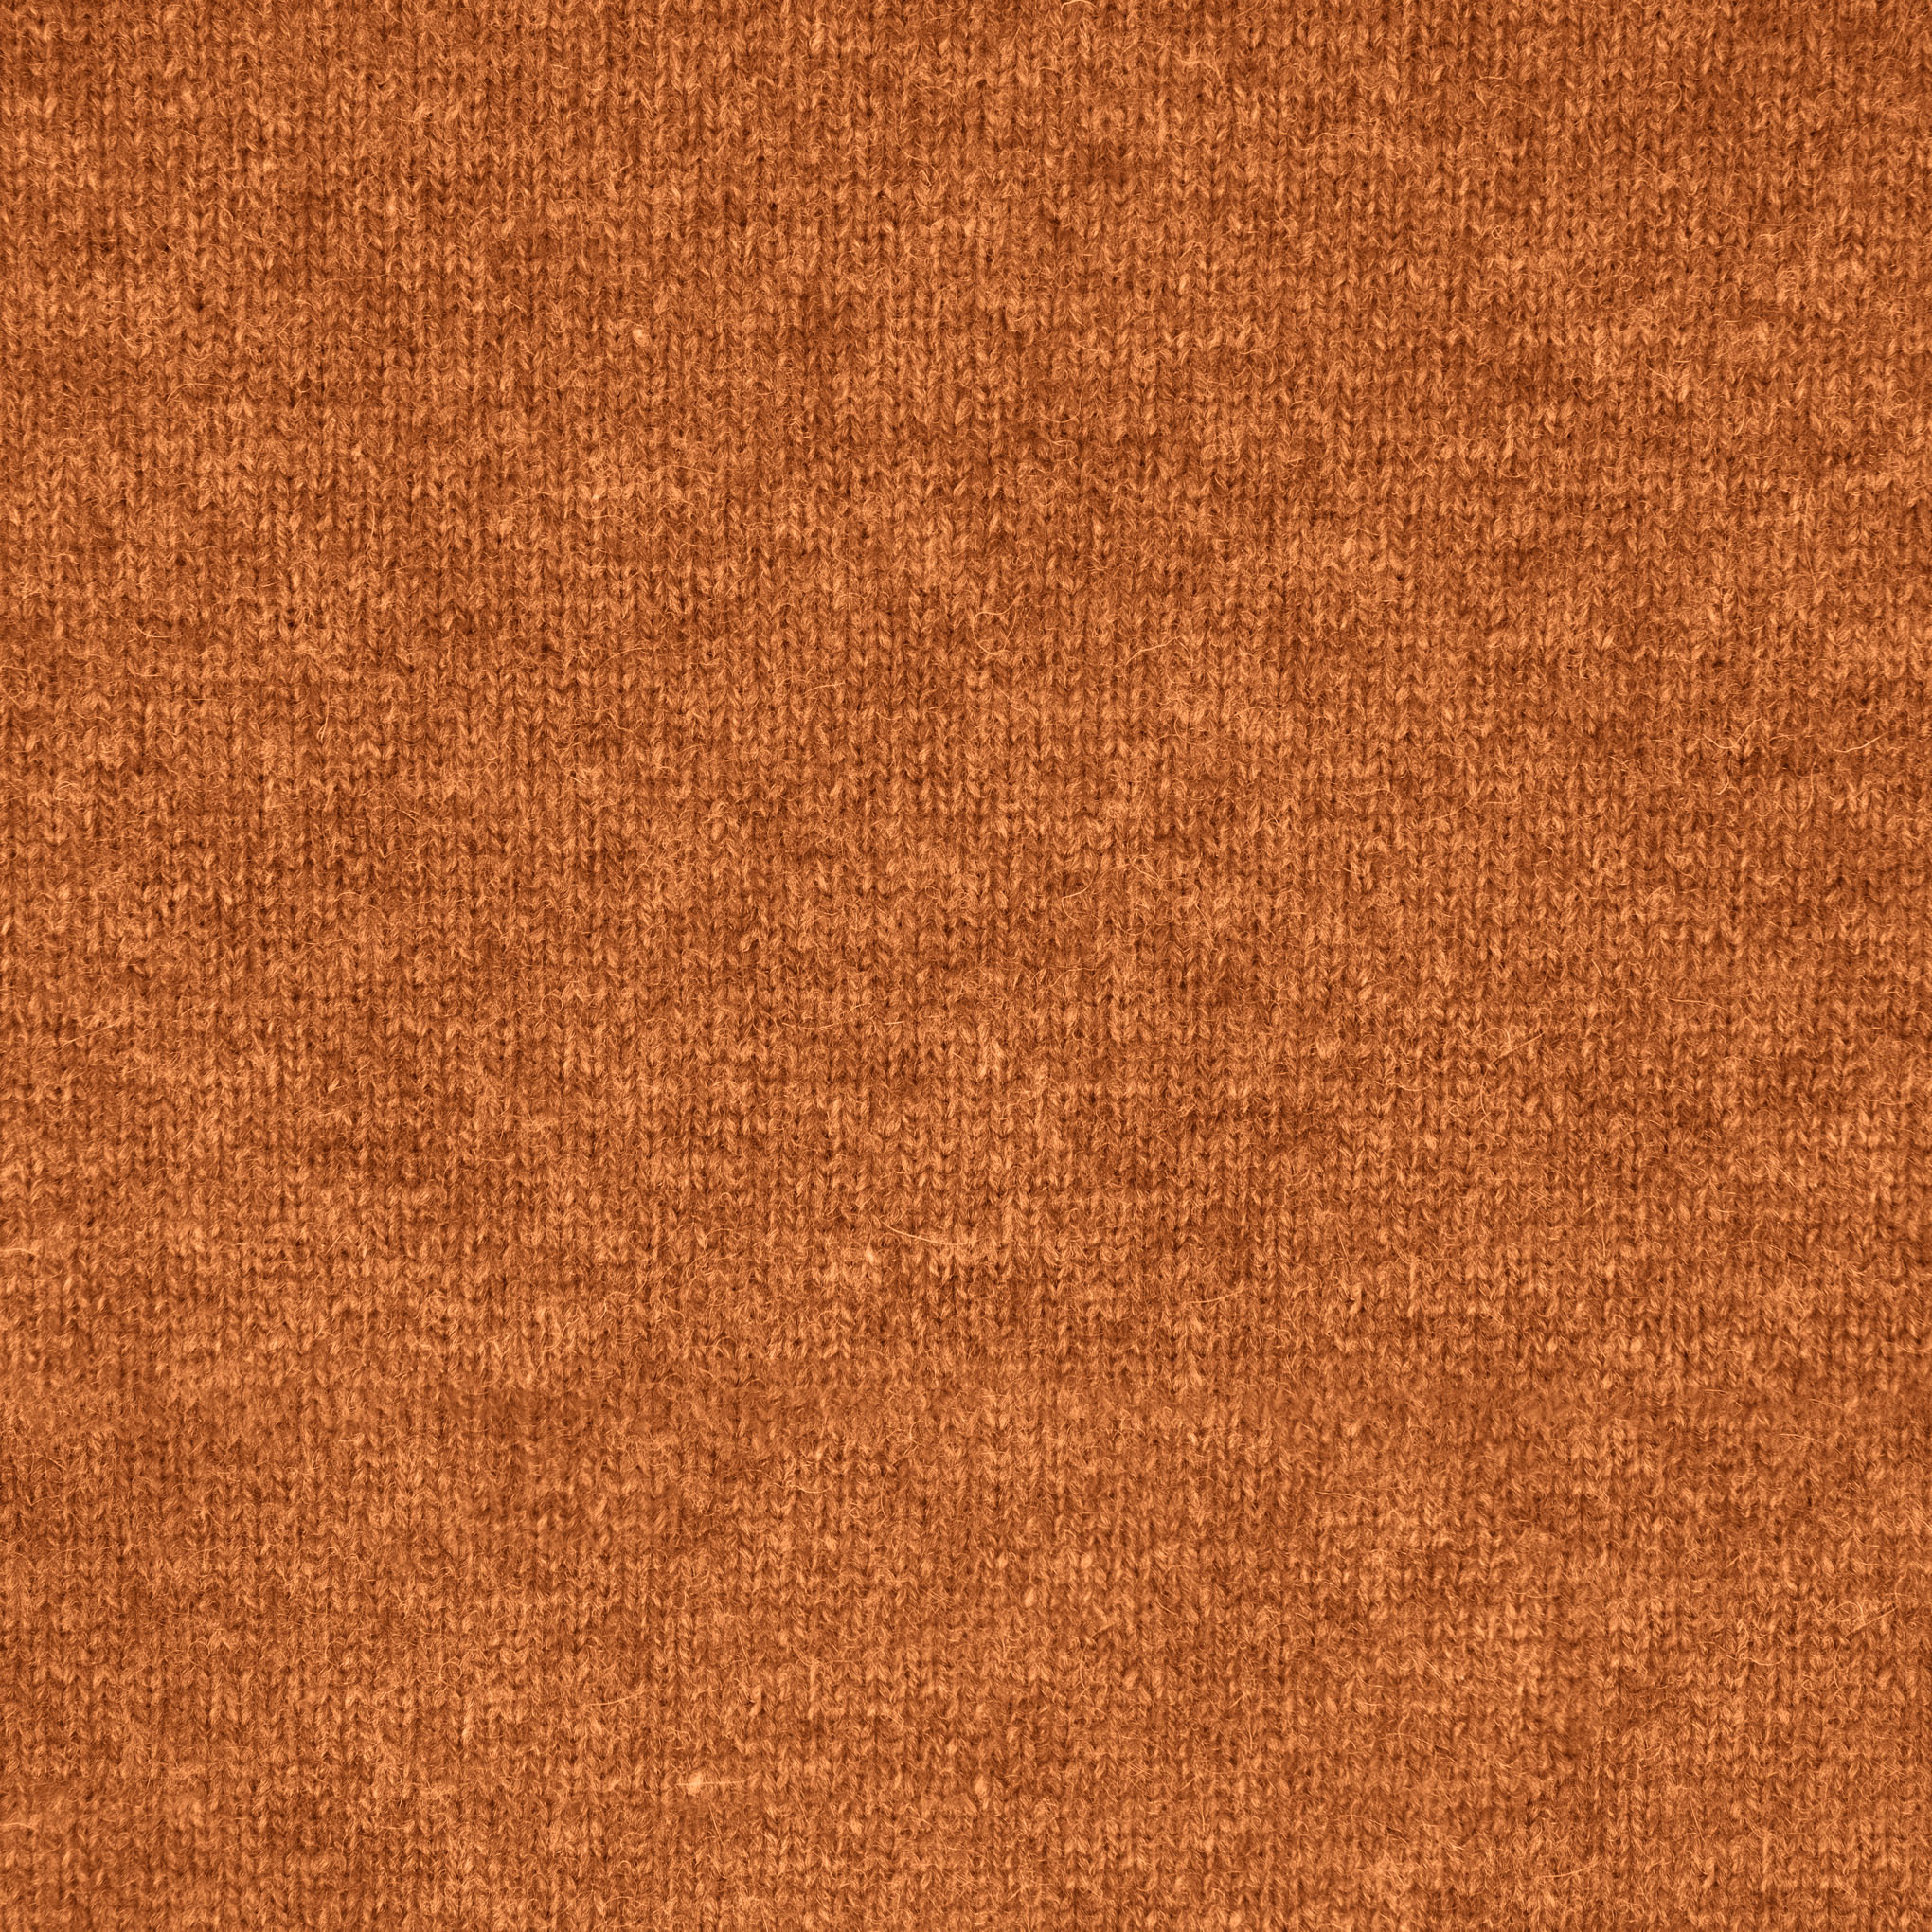 MO 150 Bay Sofa Saffron Orange Fabric Closeup 4